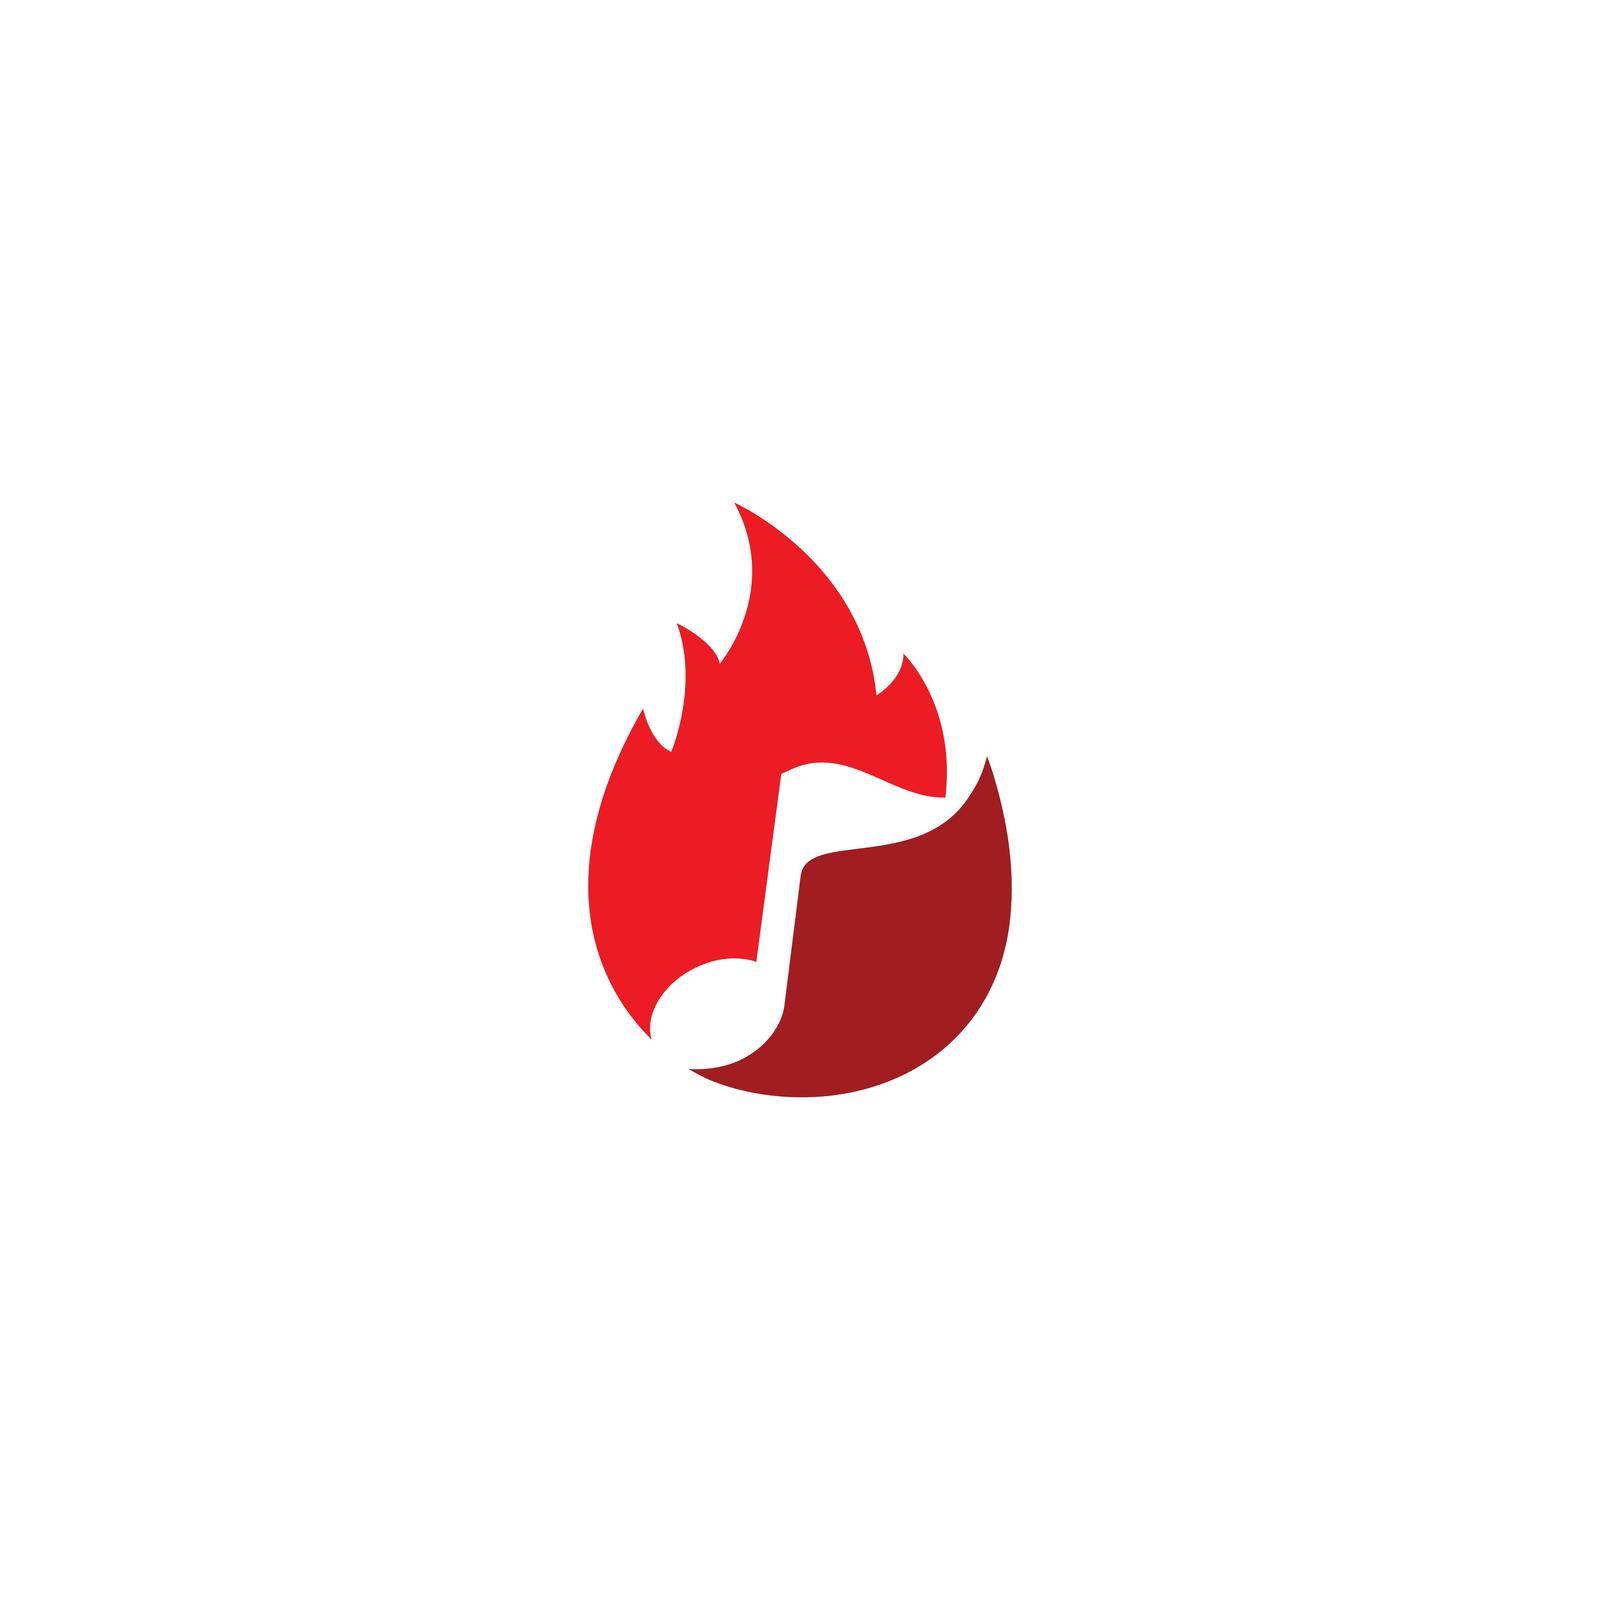 Hot Music logo by awk